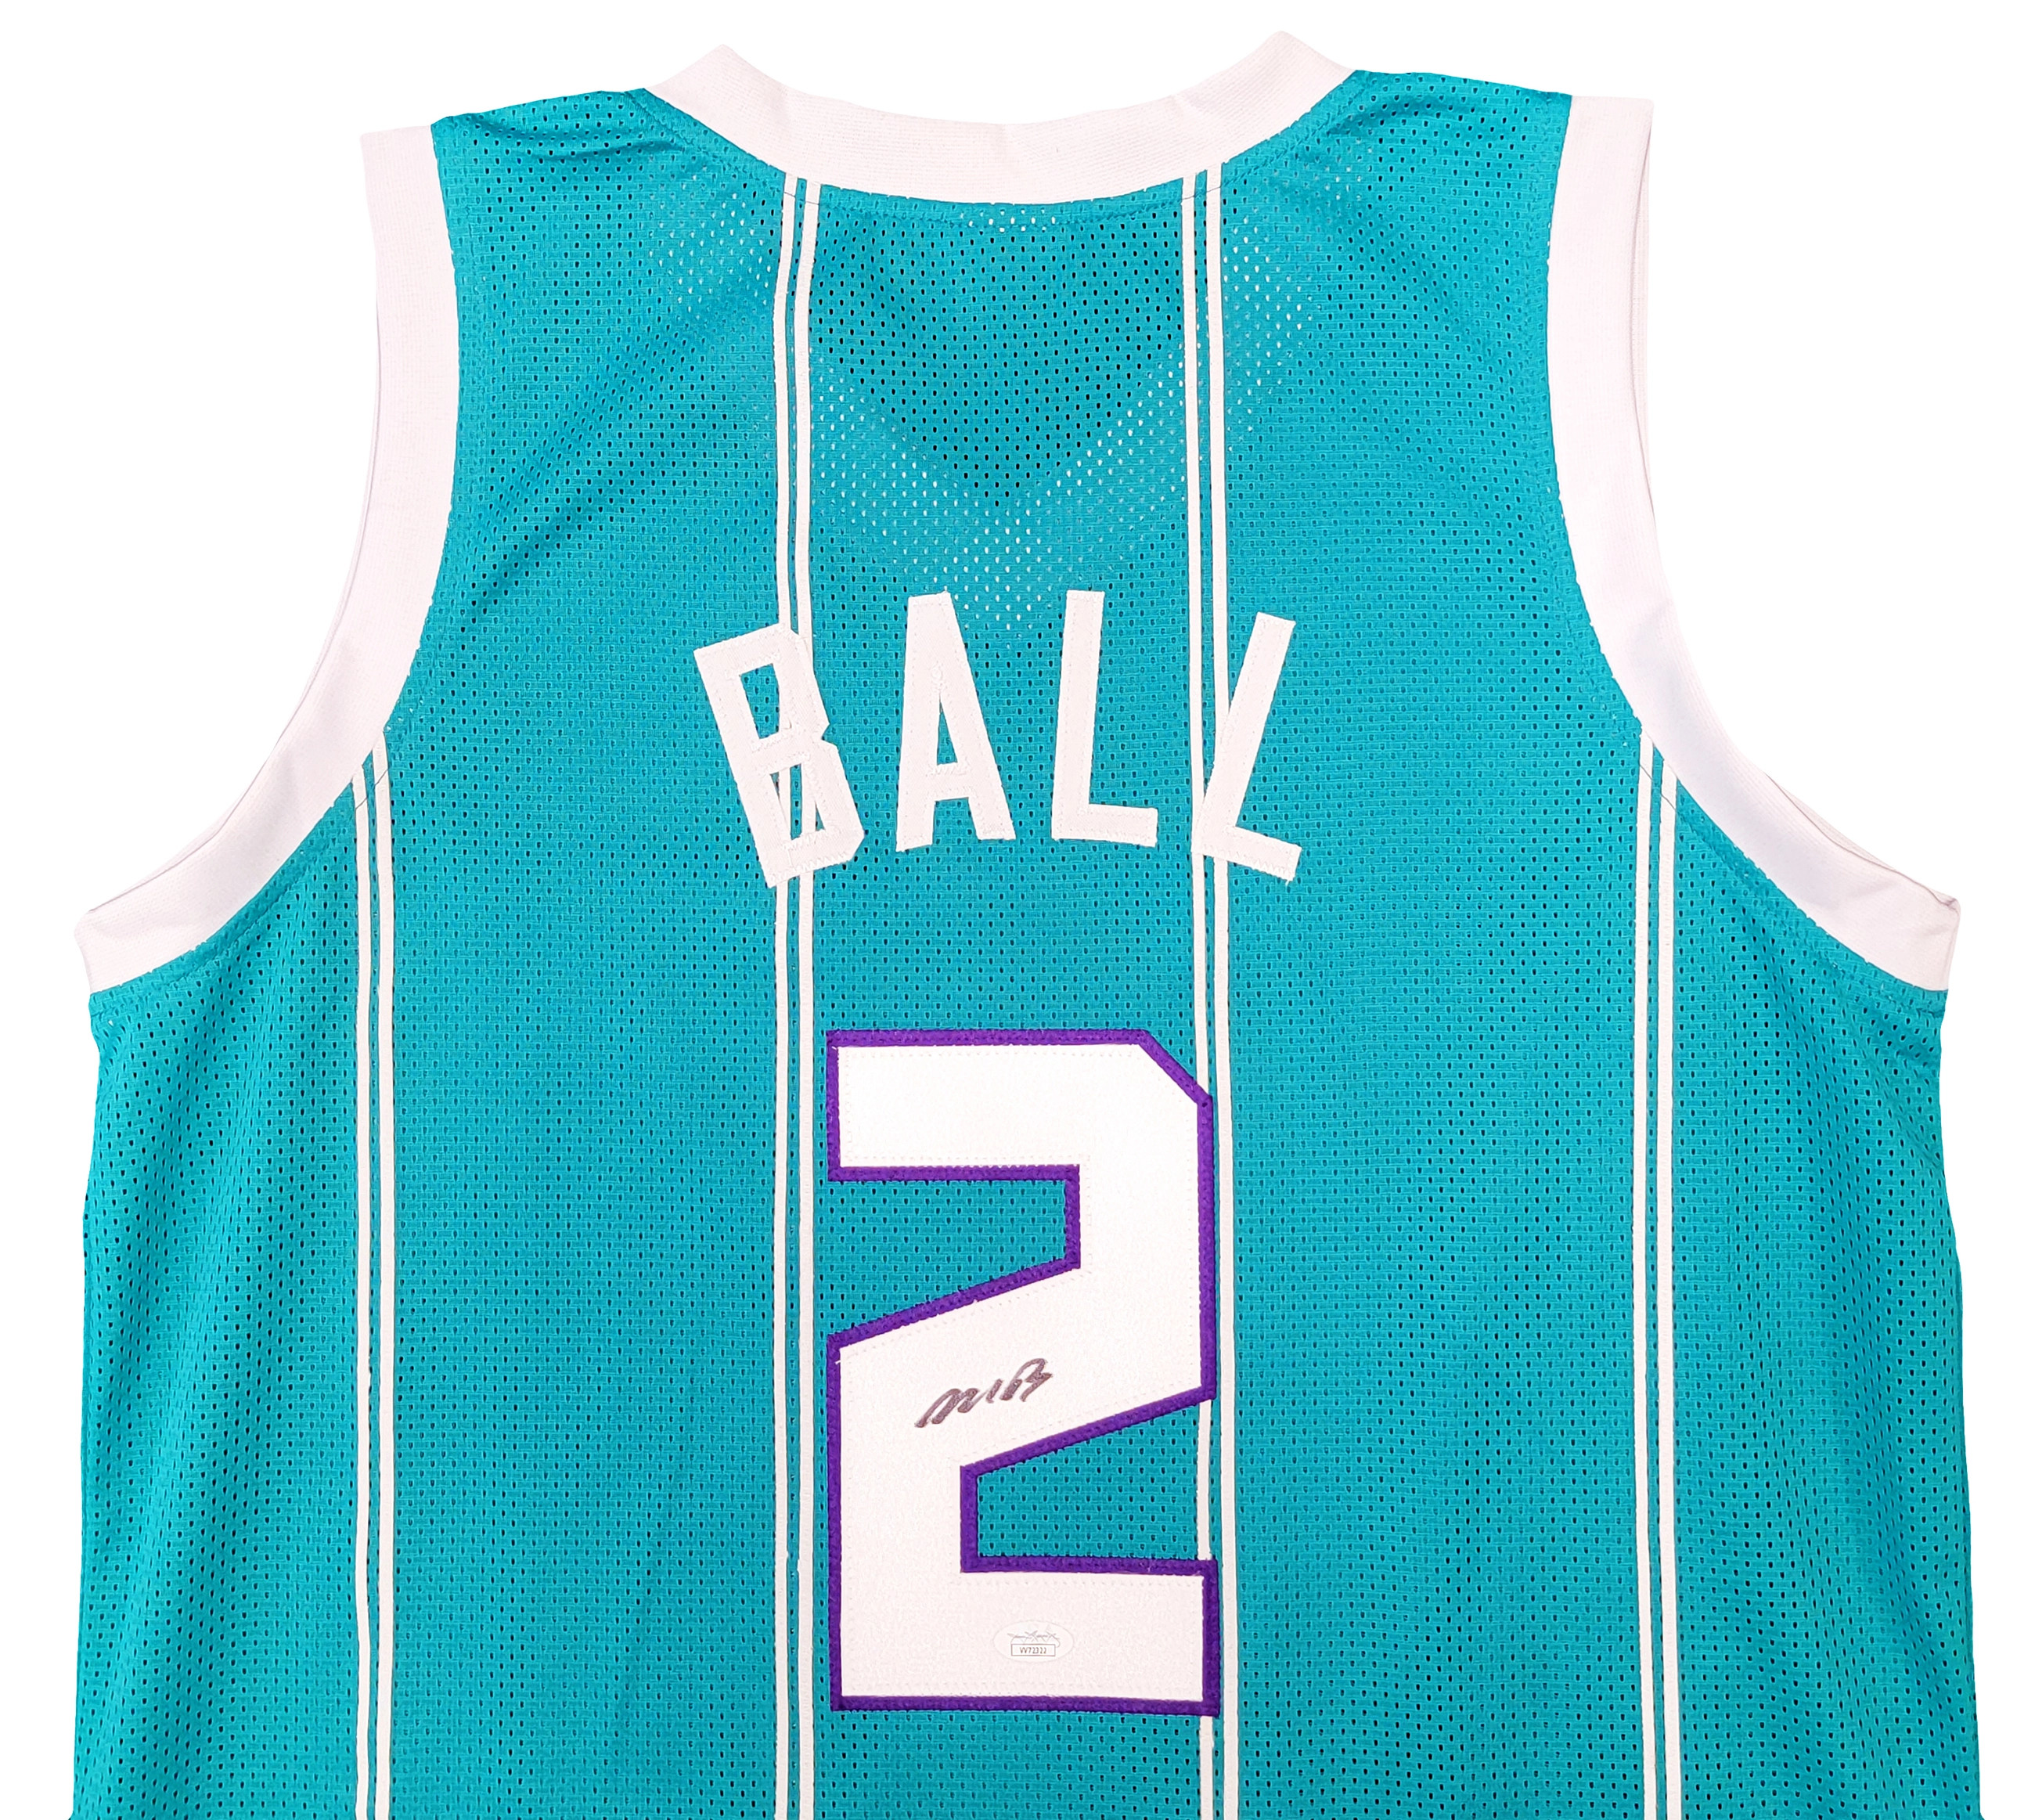 Lamelo Ball Autographed Hornets Nike Jordan Teal Jersey - BAS